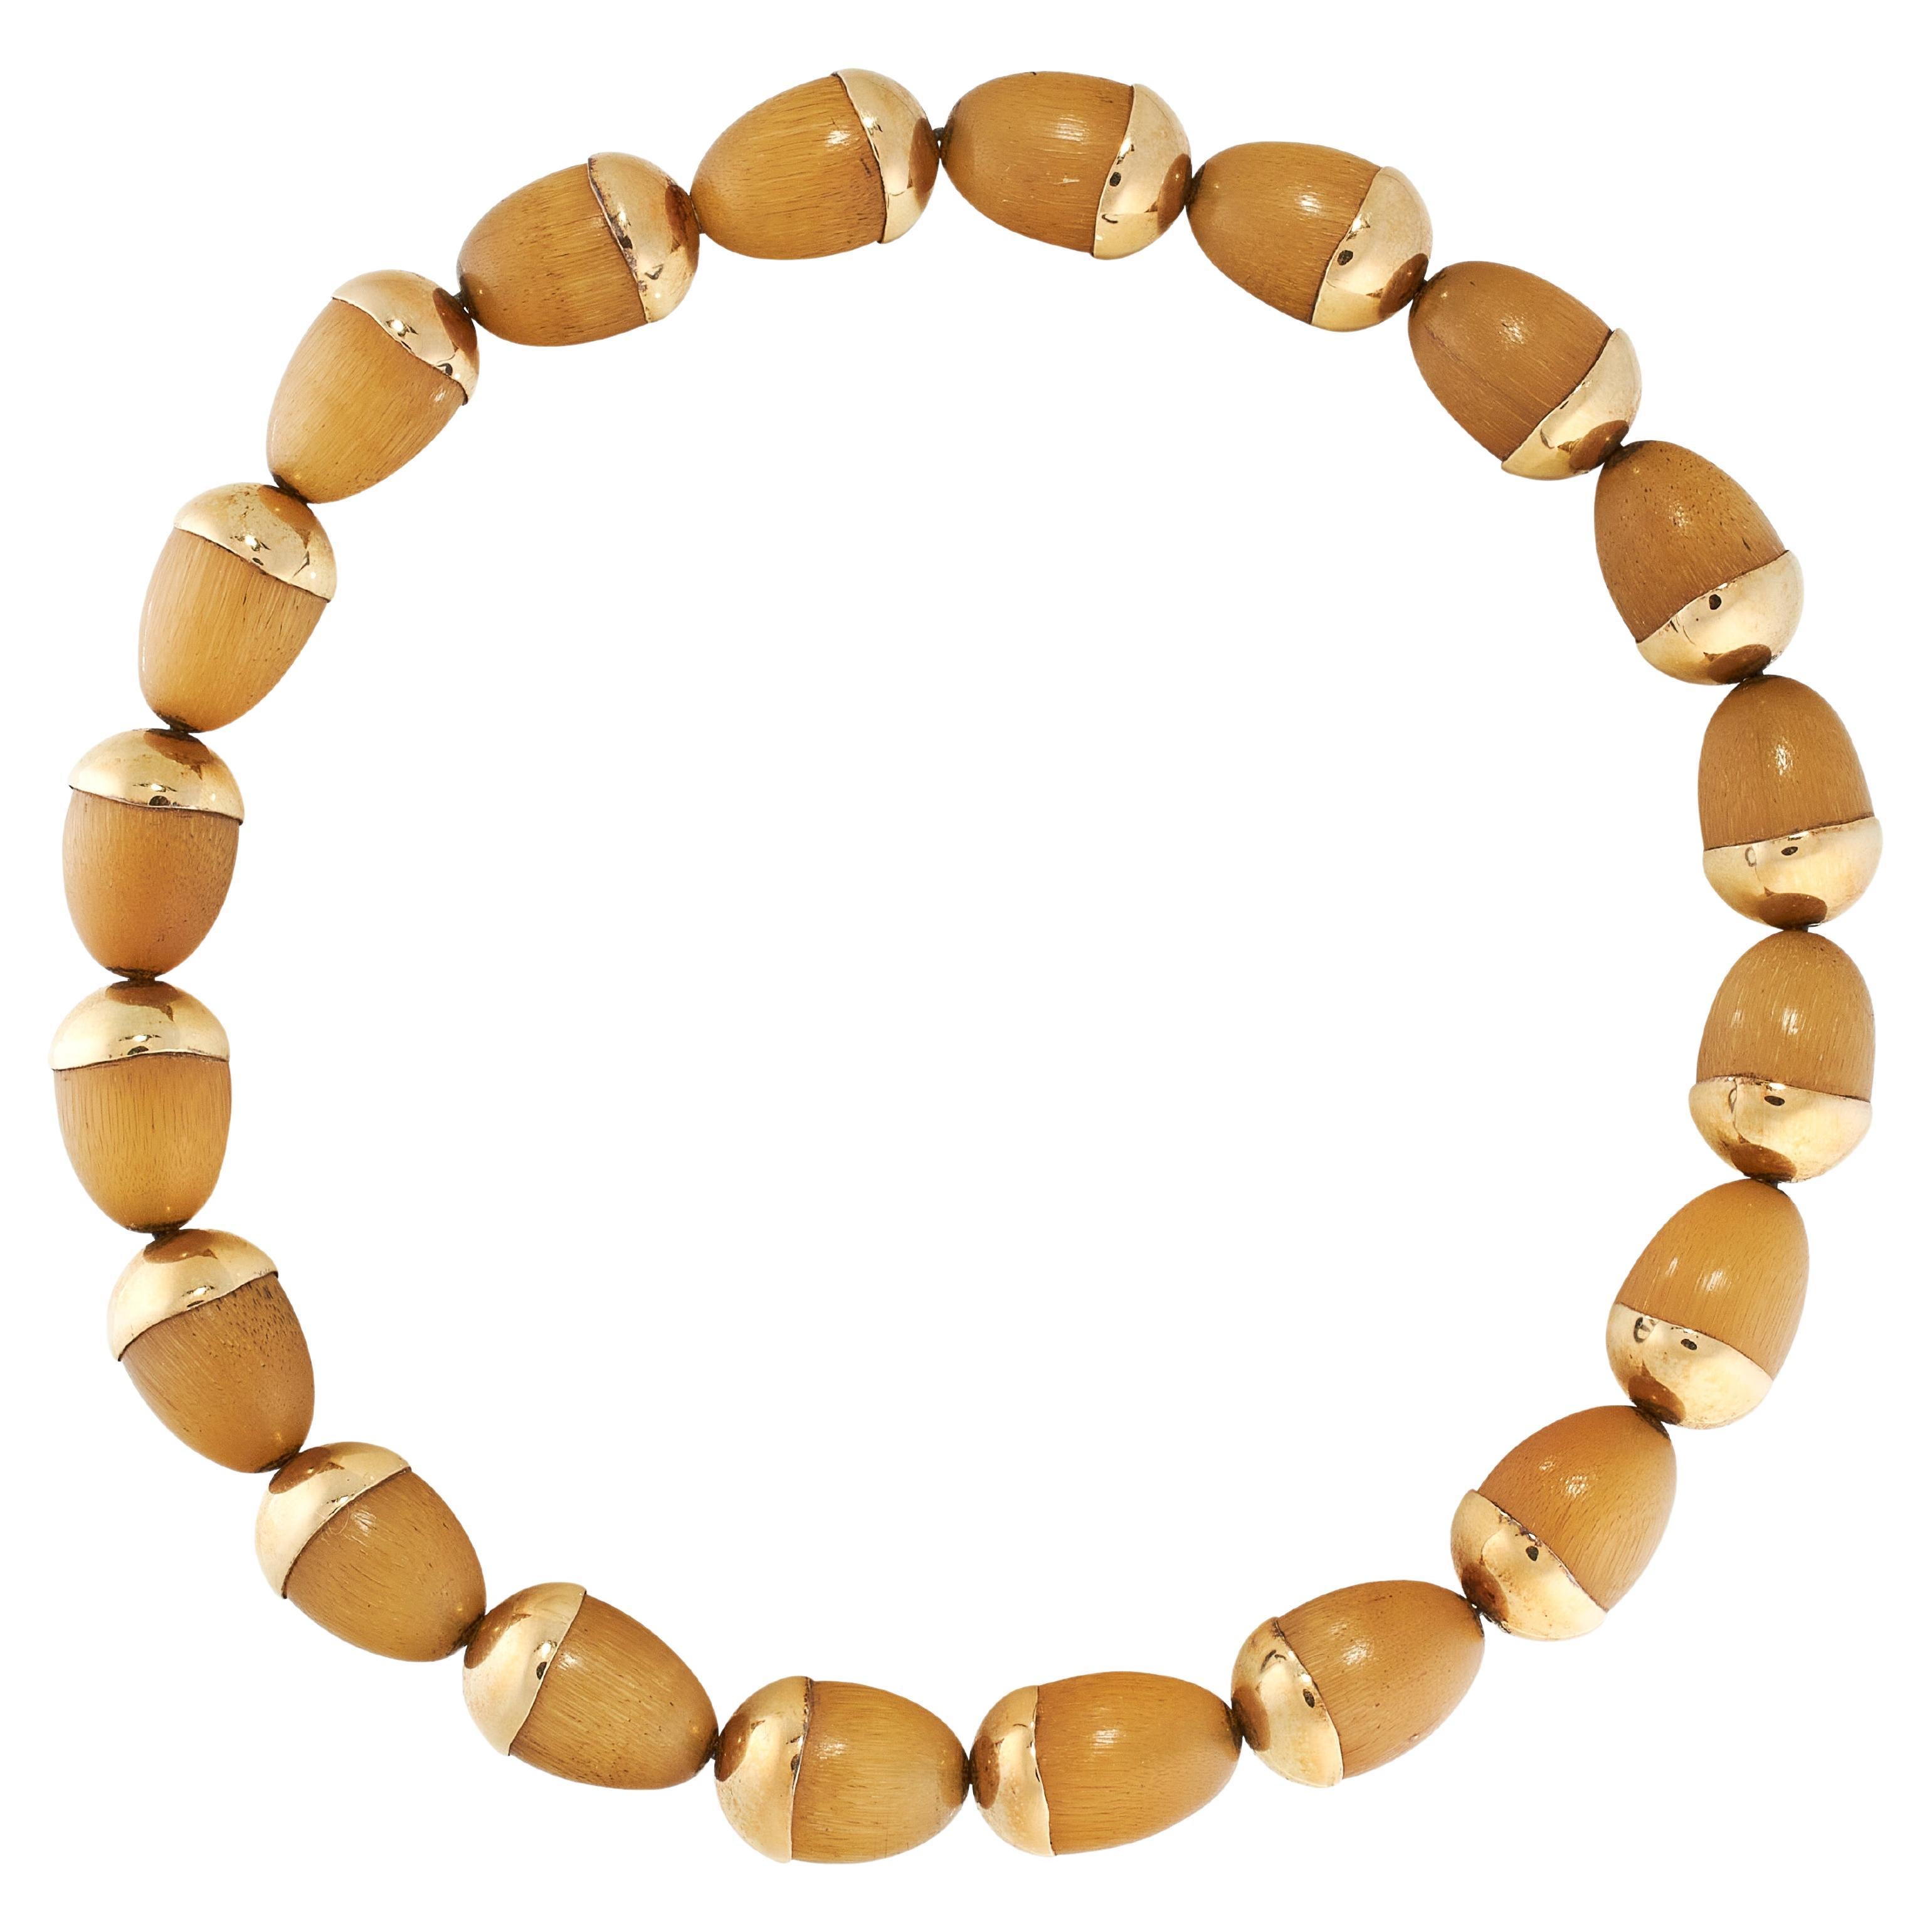 Victorian "Acorn" bead necklace